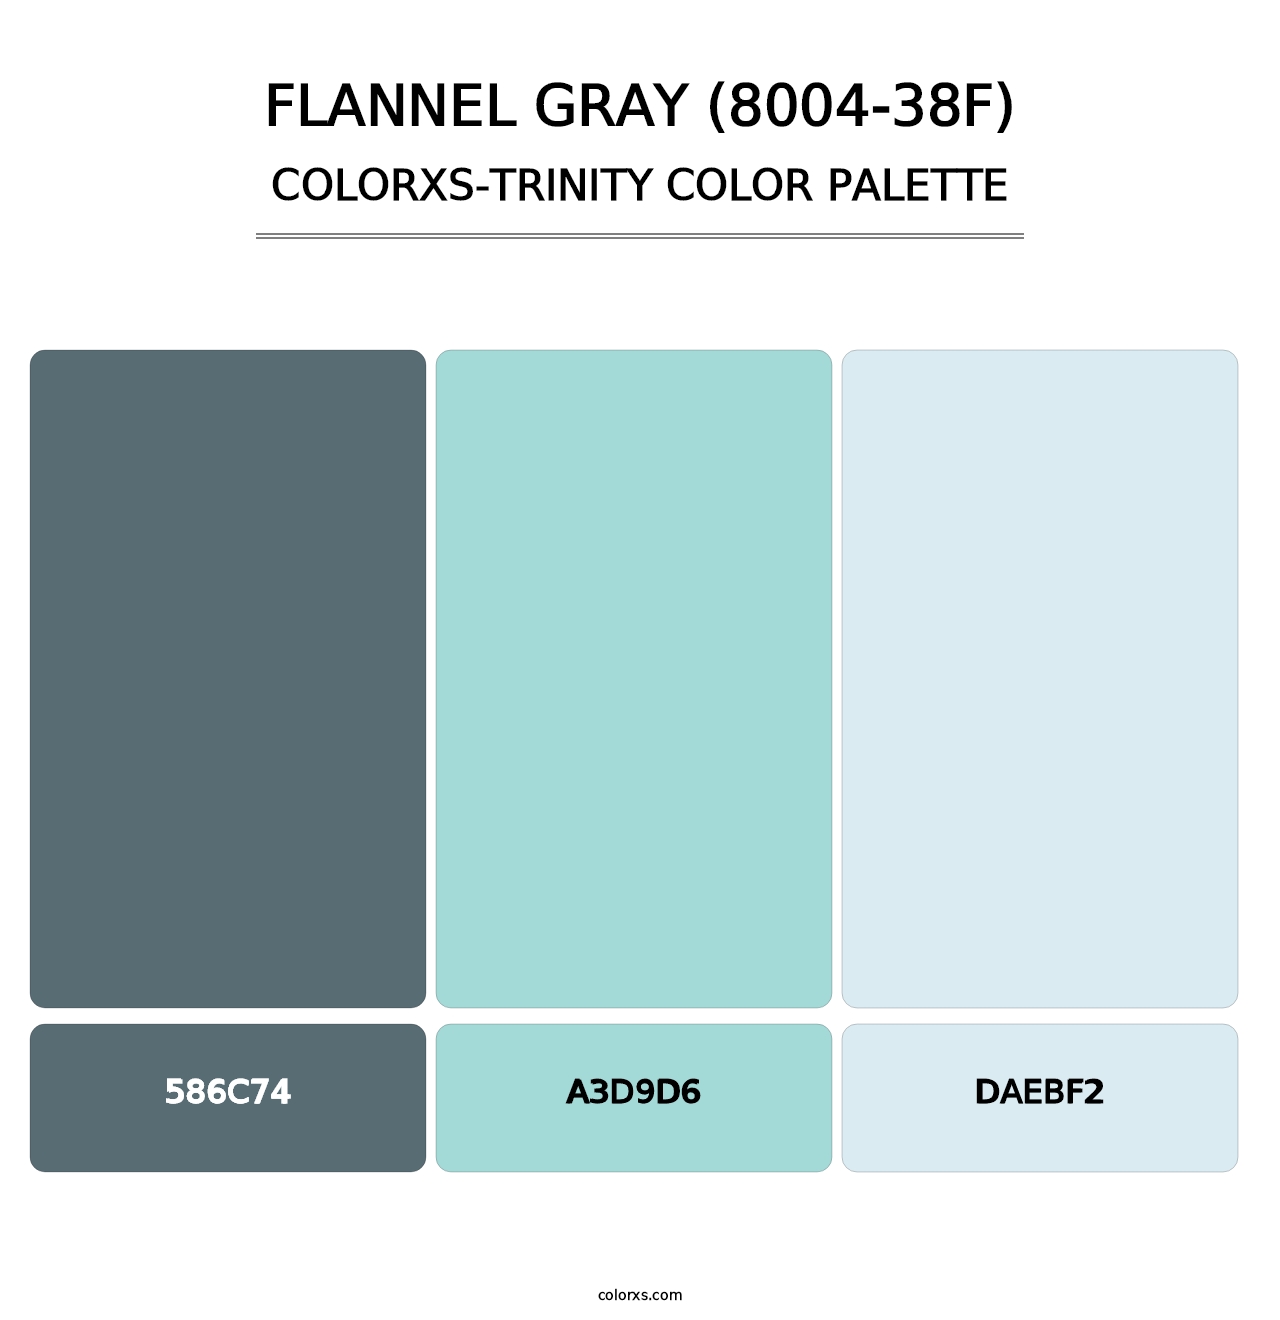 Flannel Gray (8004-38F) - Colorxs Trinity Palette